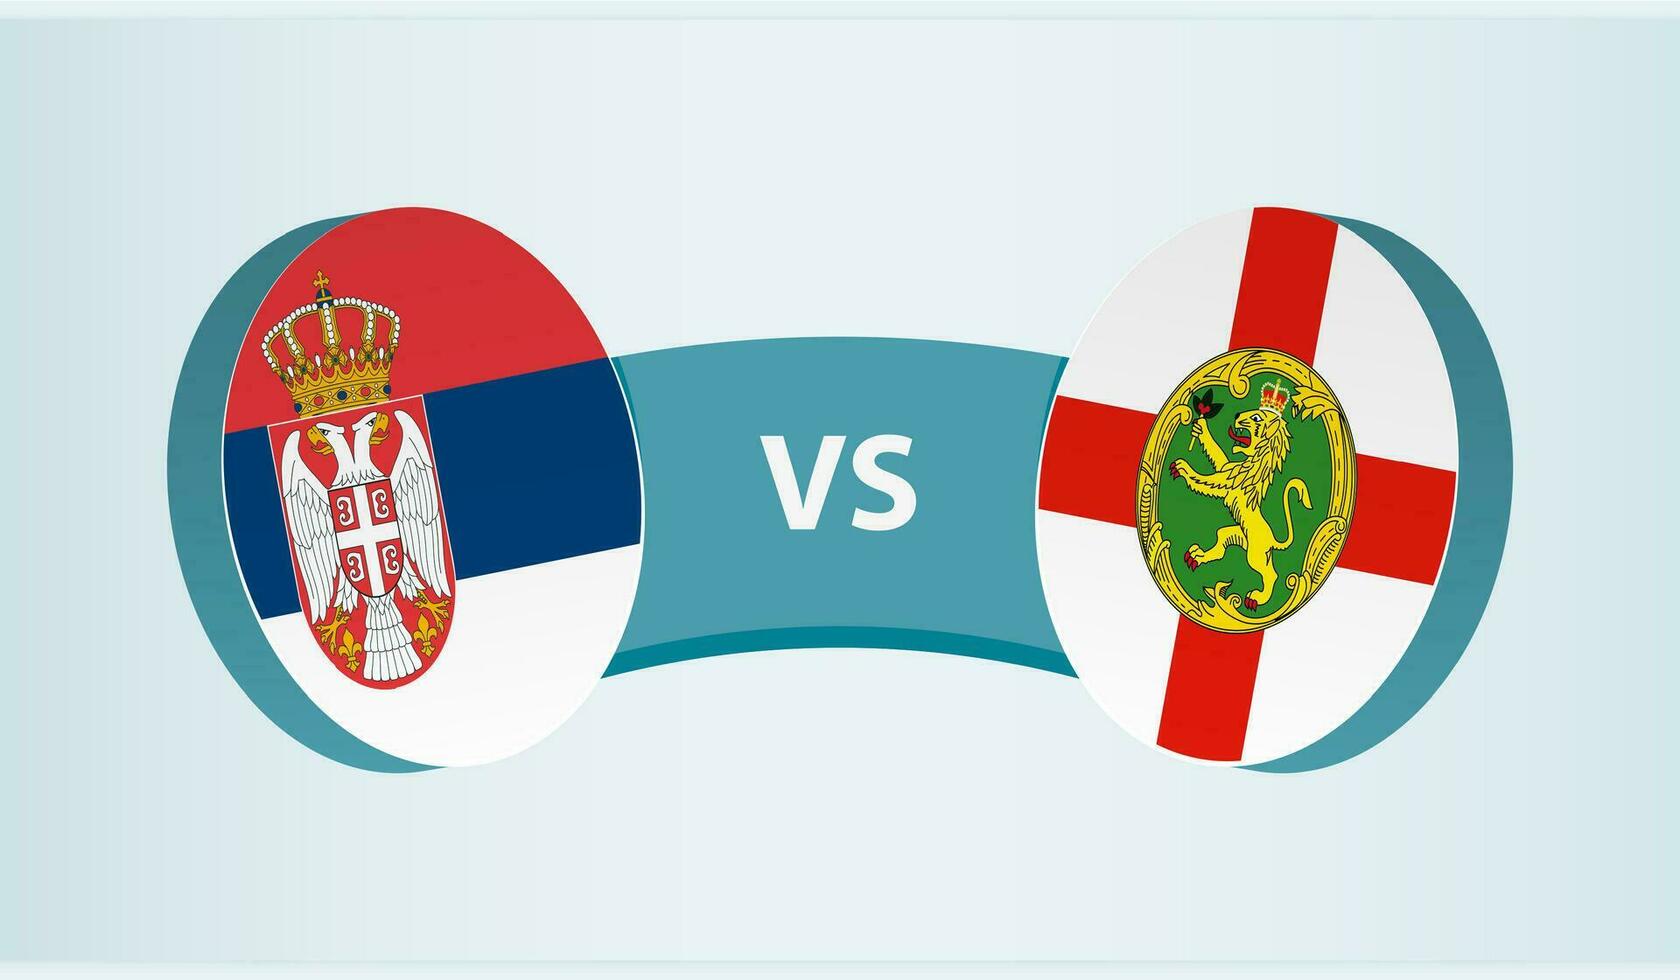 Serbia versus Alderney, team sports competition concept. vector